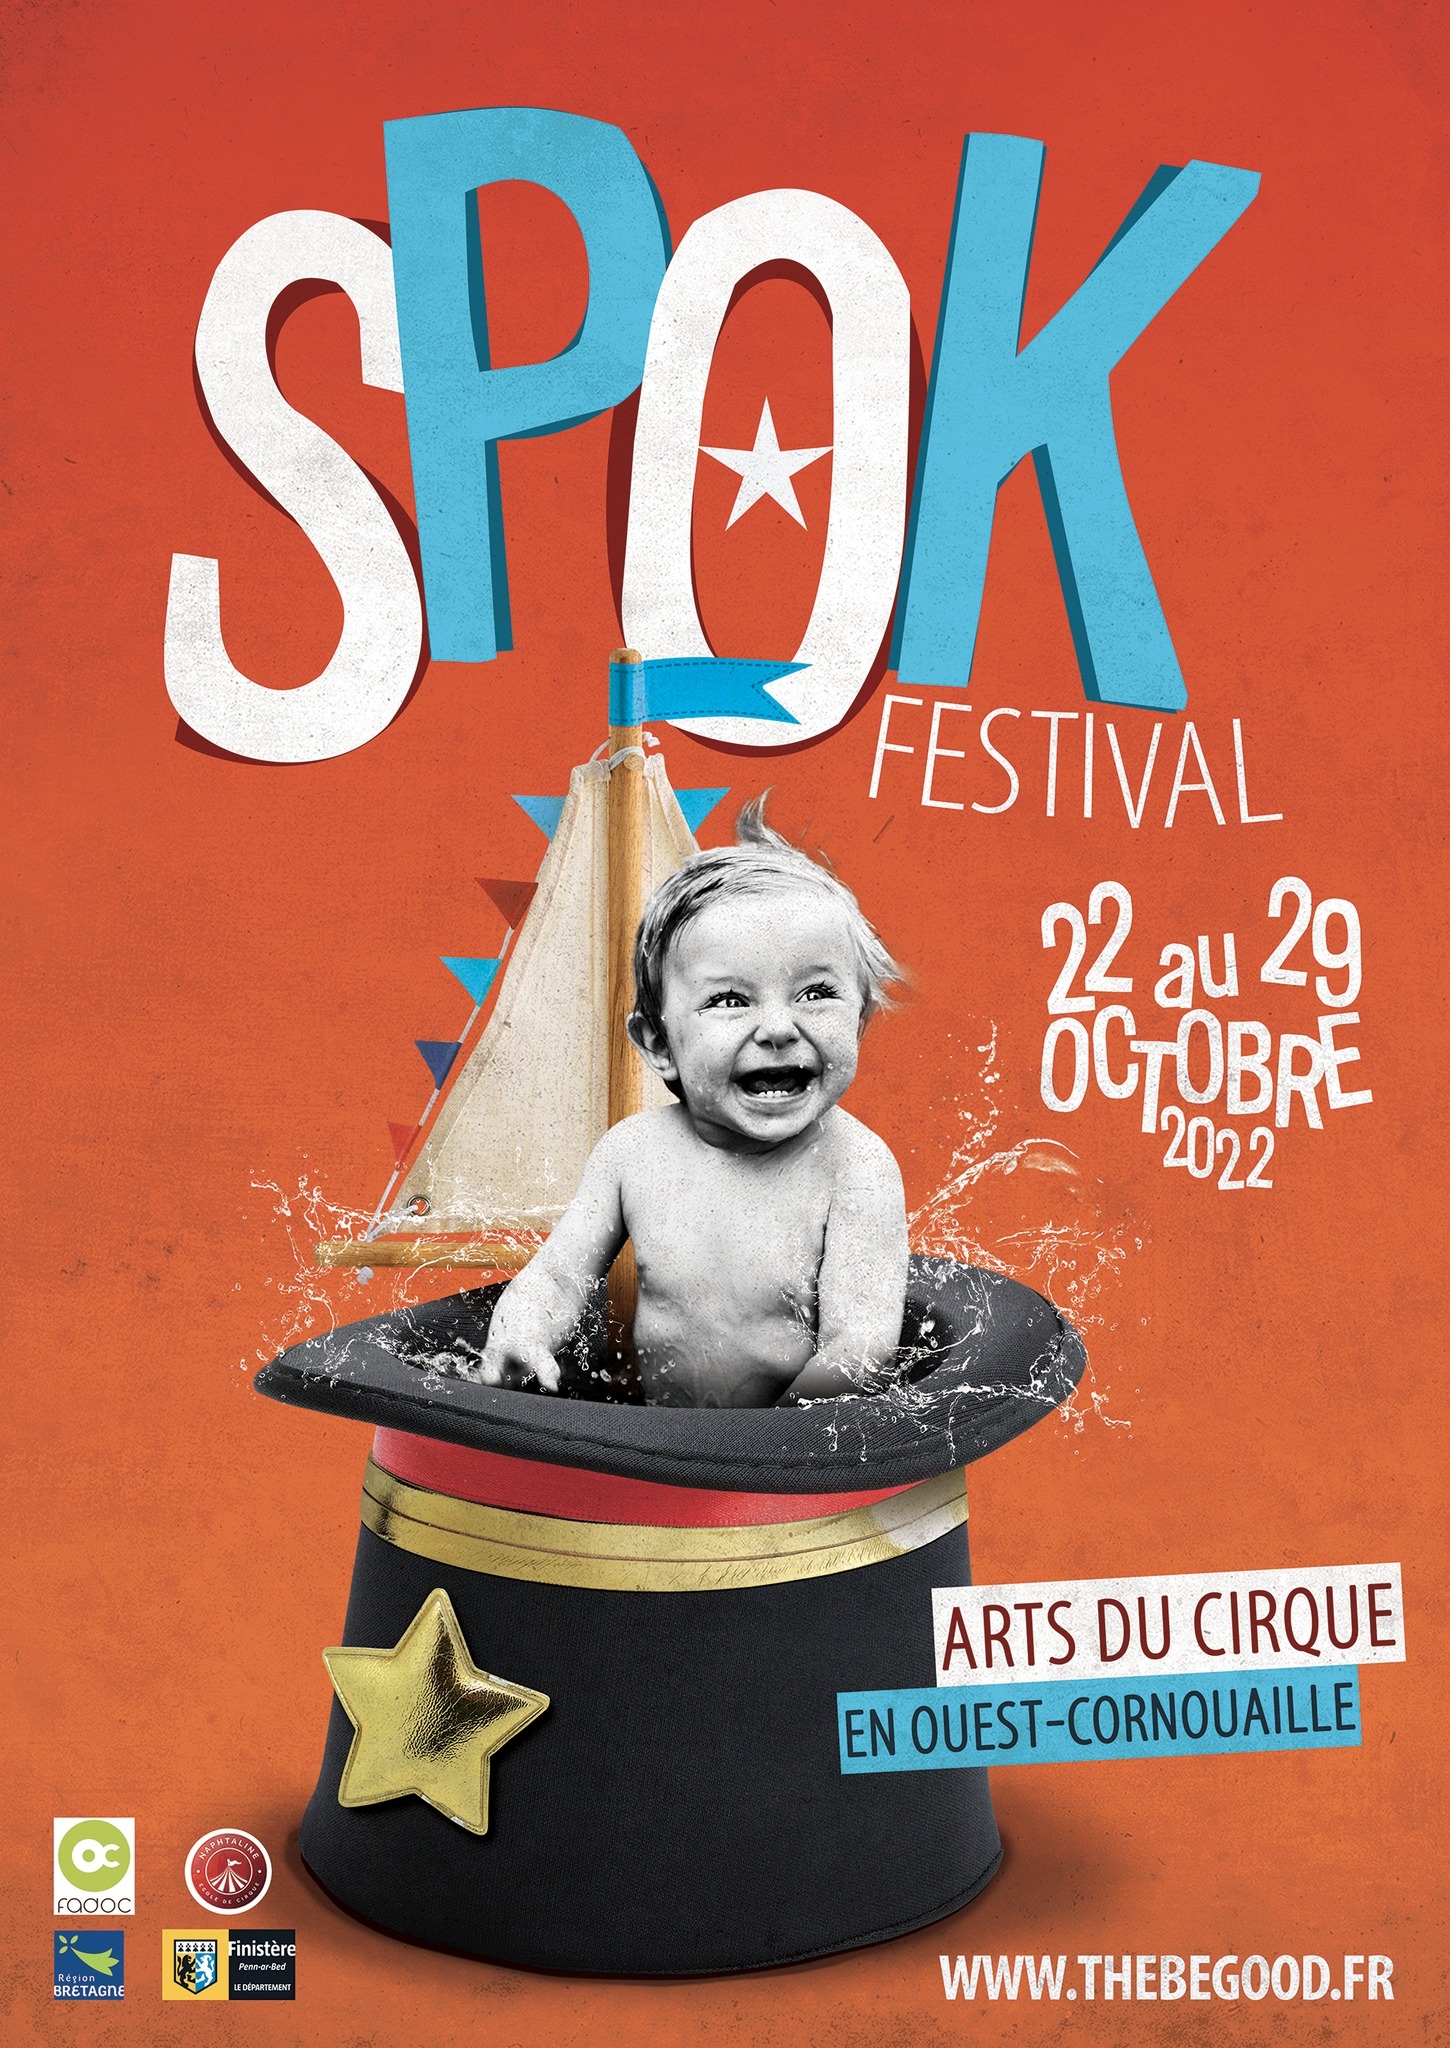 Spok Festival - "A tiroirs ouverts"